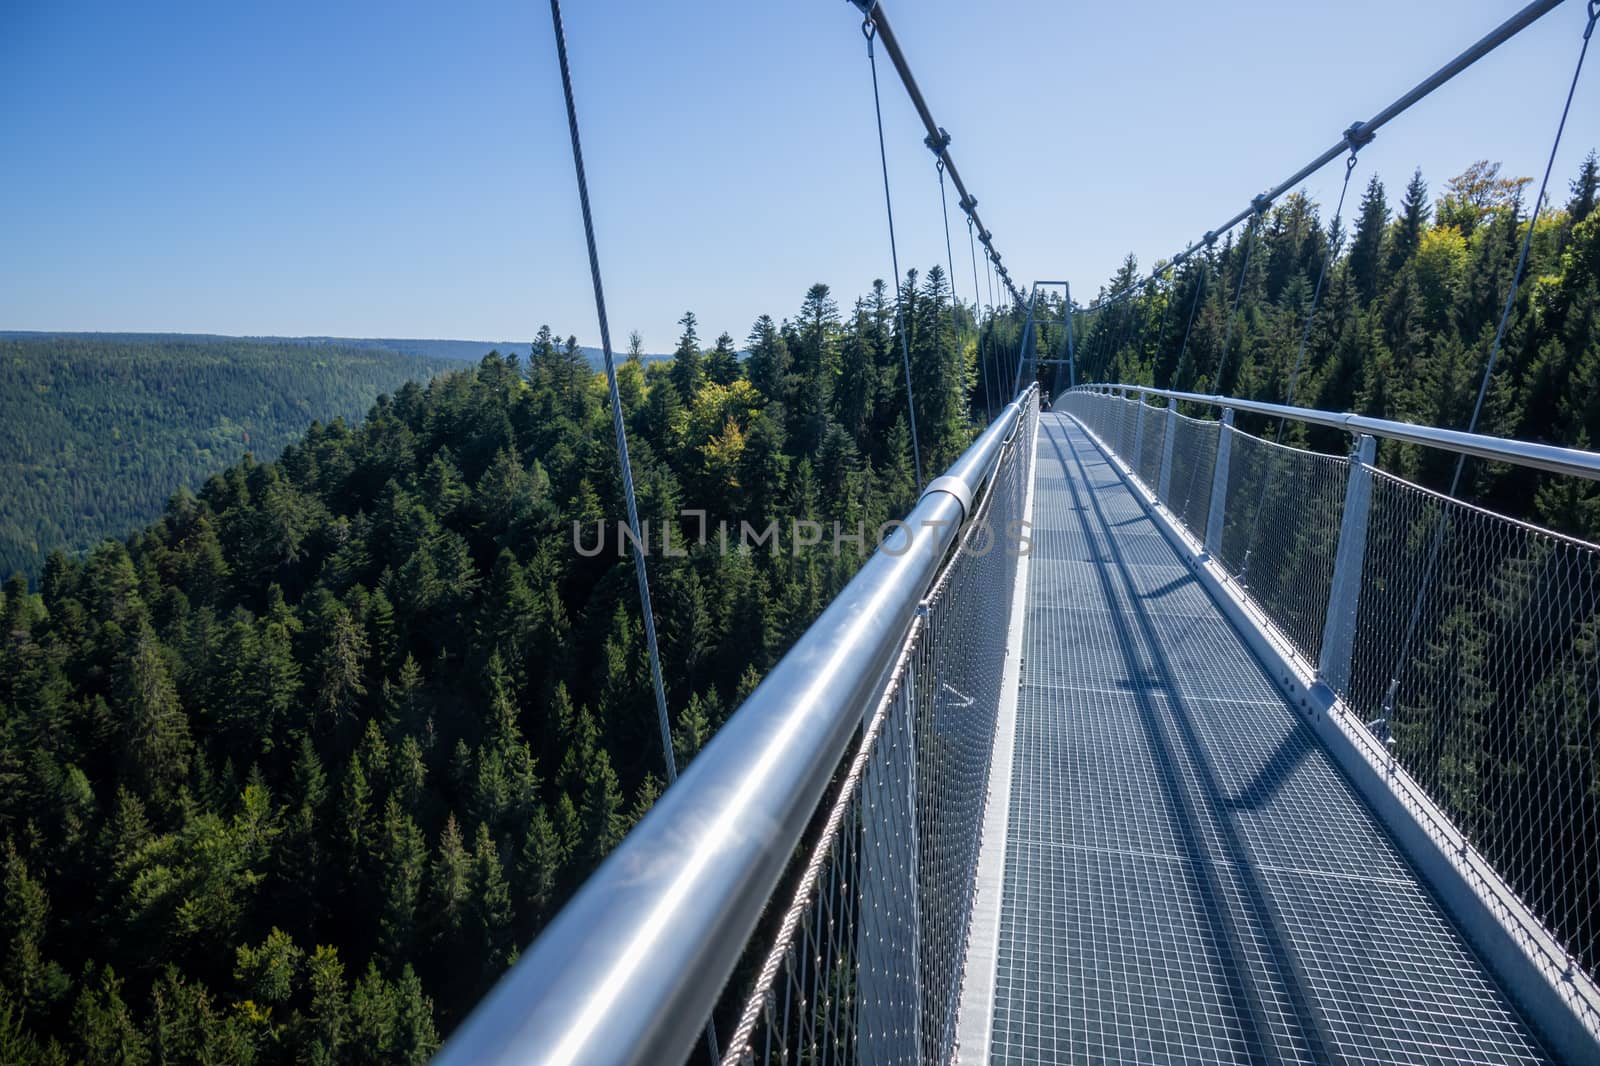 cable bridge at Bad Wildbad south Germany by magann